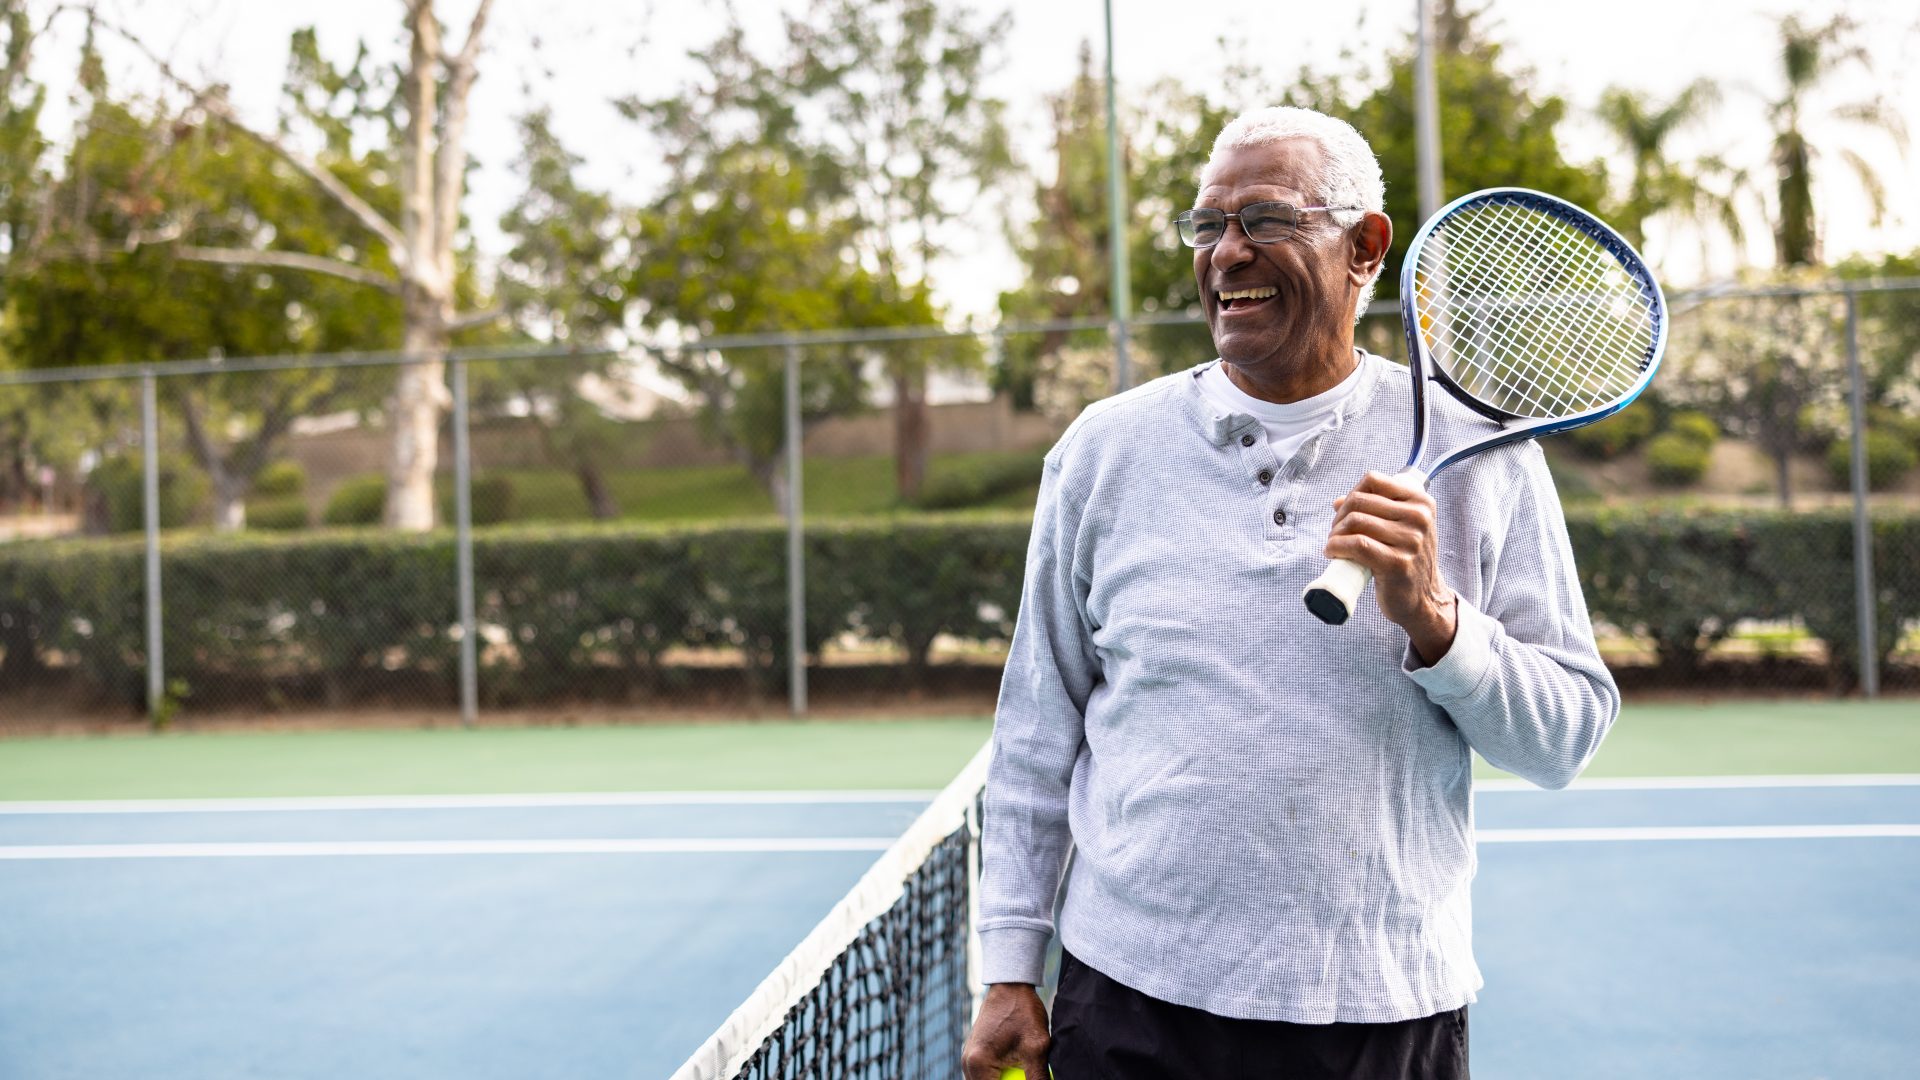 Portrait of a senior black man on the tennis court